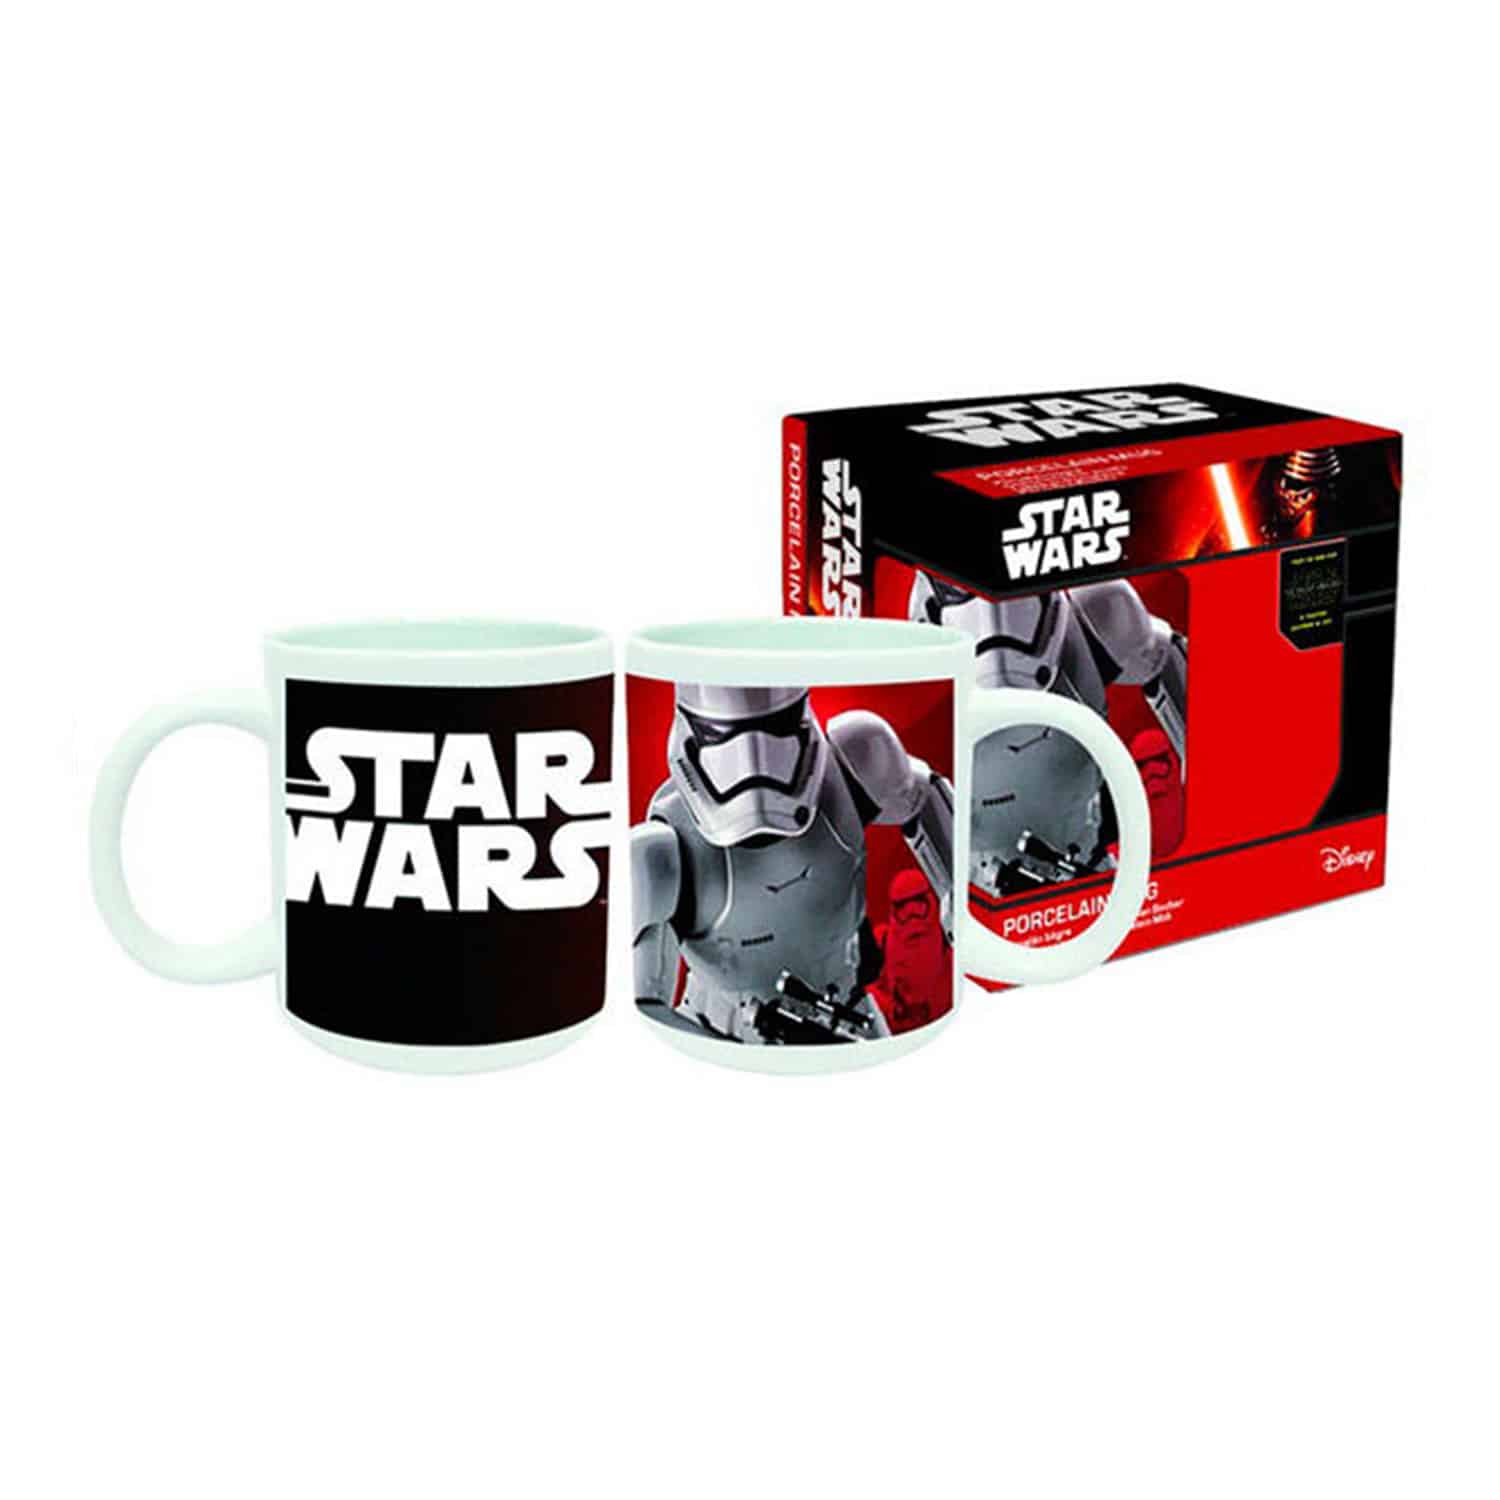 Star Wars - Stormtrooper Mug